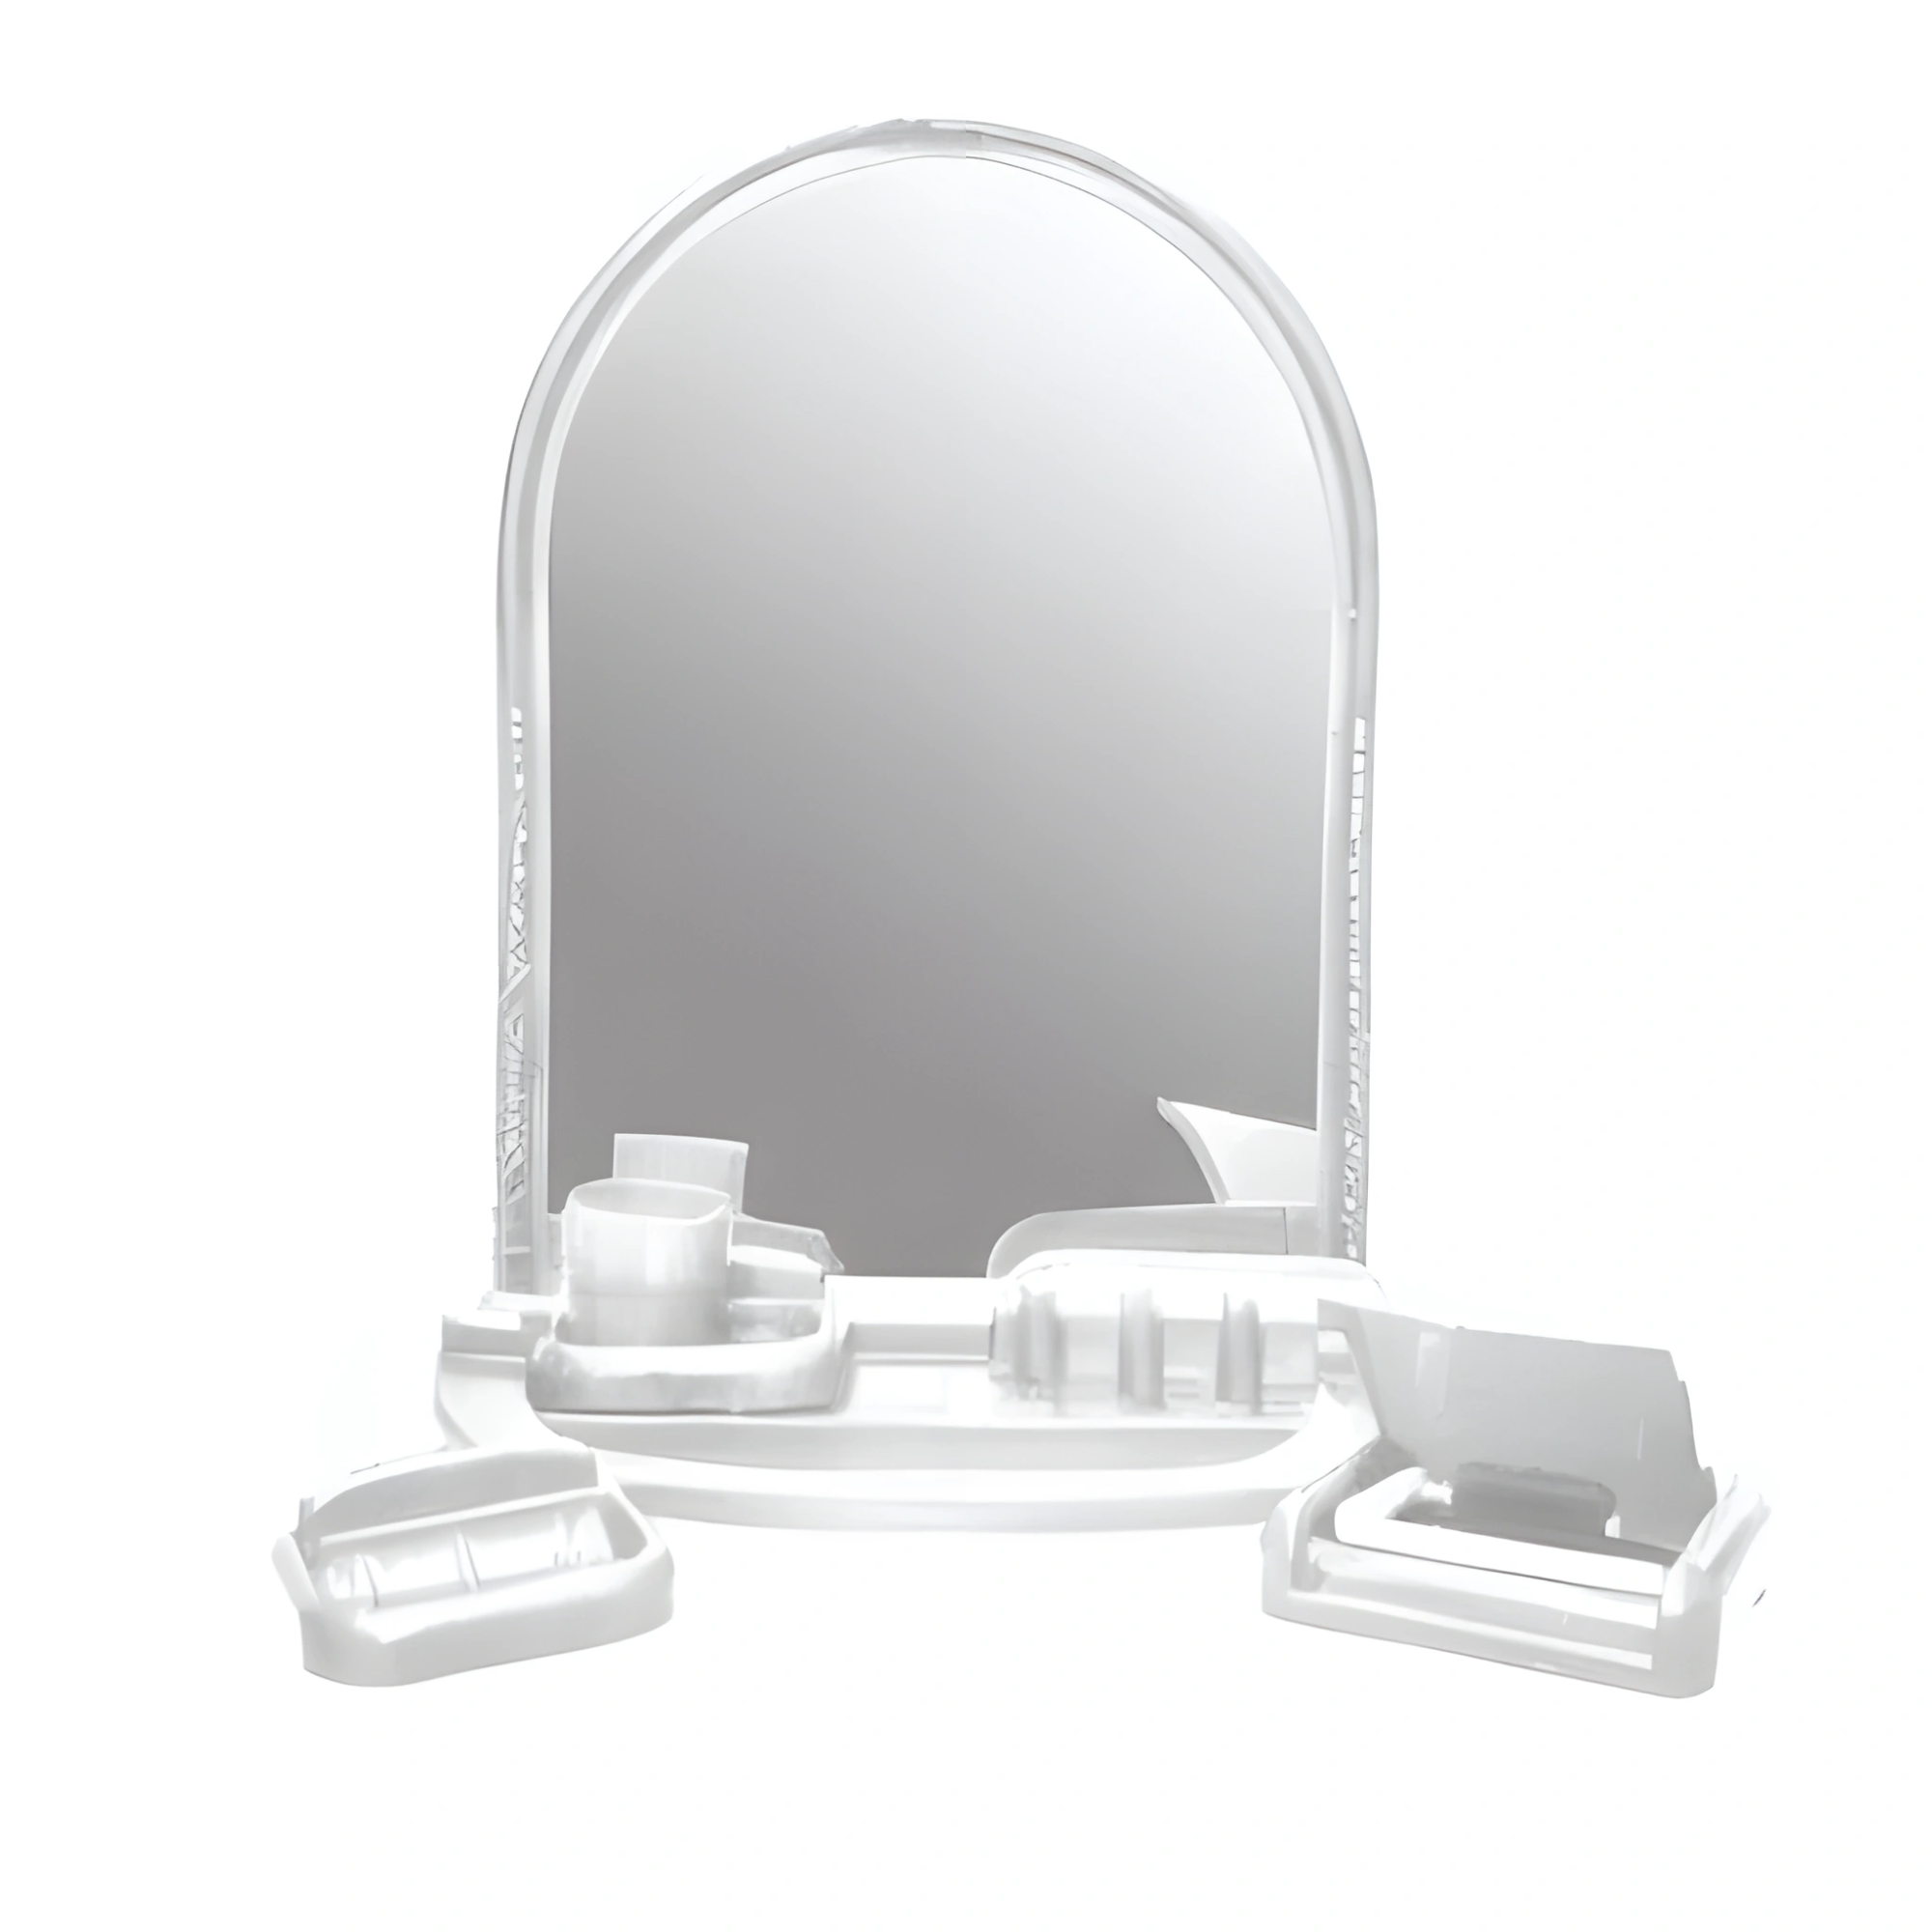 Набор для ванны зеркало. Набор ПМ Д/ванной комнаты 8пр с зеркалом Adria 2001-00. Набор для ванной Адрия 2003 с зеркалом/5. Зеркальный набор для ванной белый, 2001 «Adria». Зеркальный набор Олимпия белый.